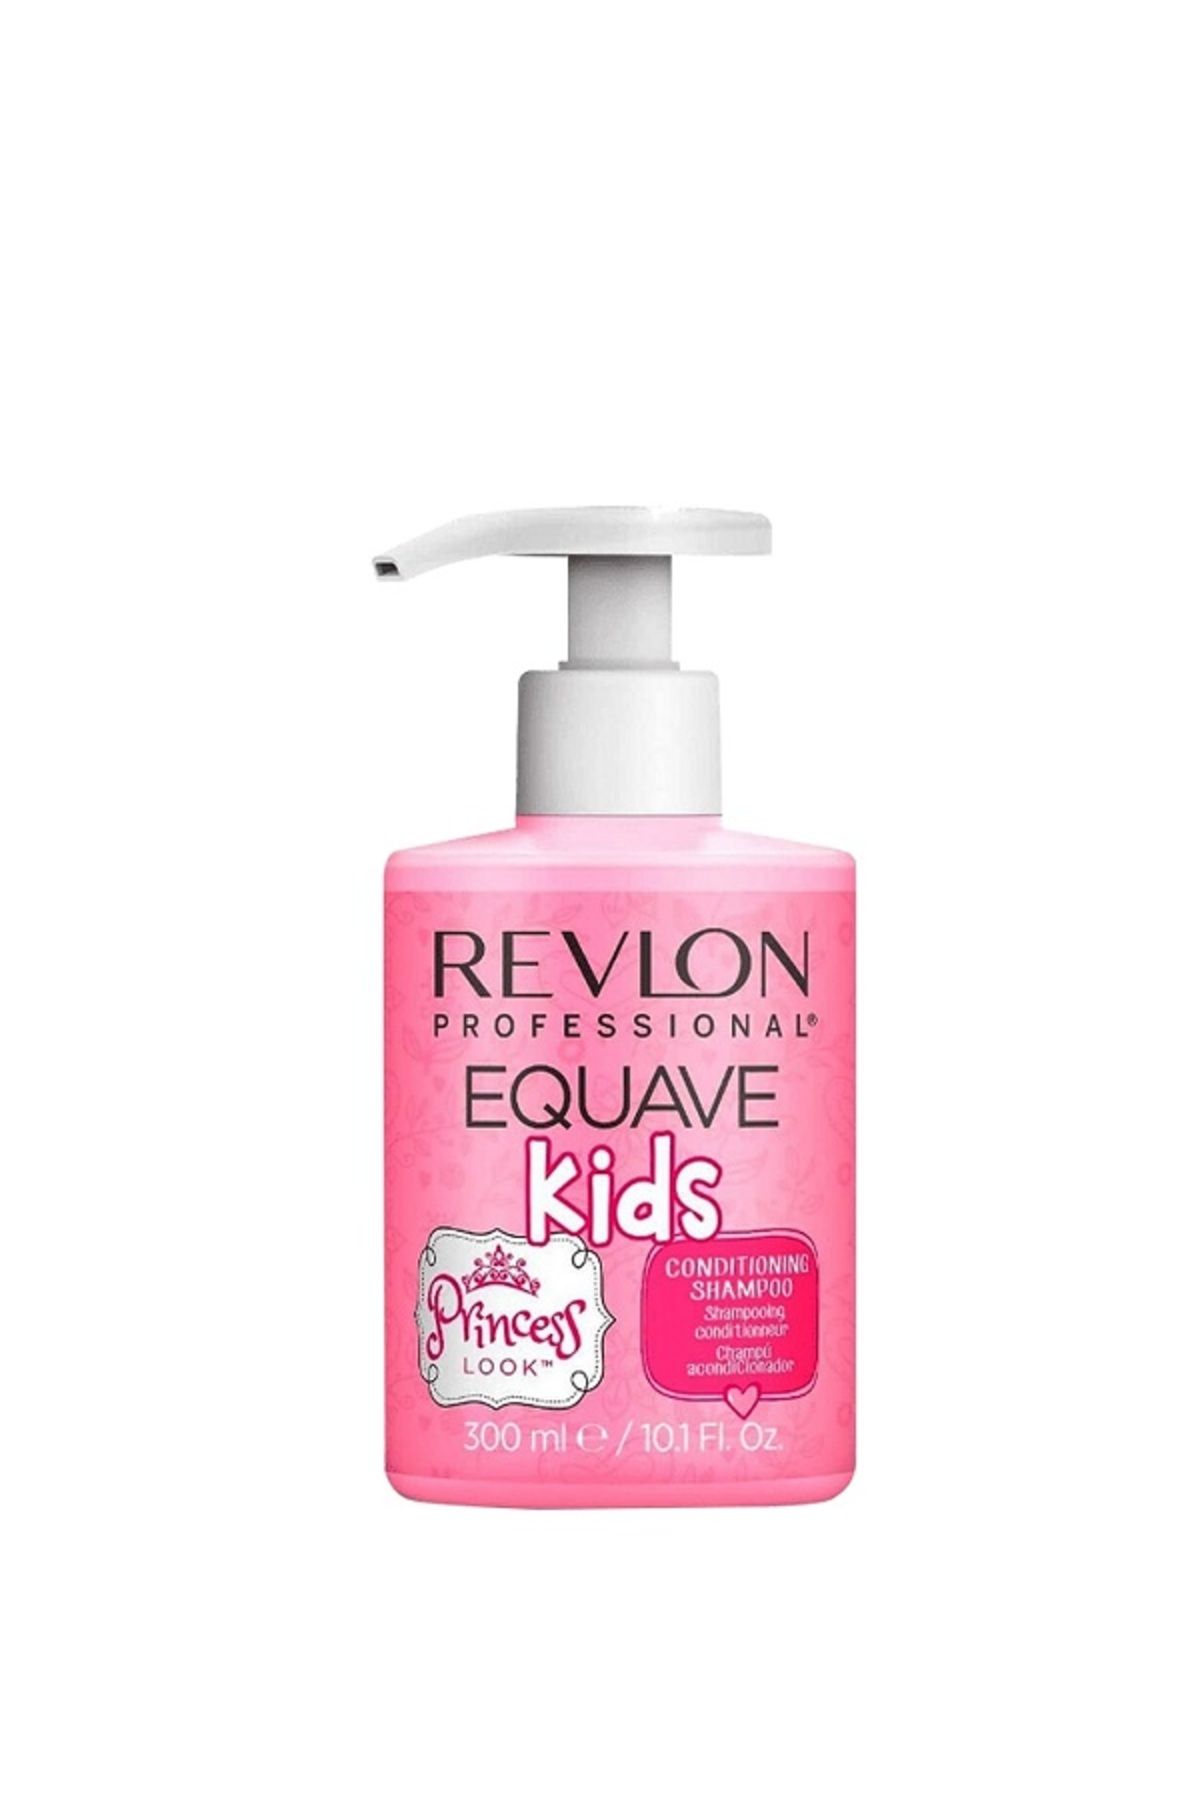 Revlon Equave Kids Princess Children's Shampoo That Makes Hair Soft and Silky 300 ml DEMBA604